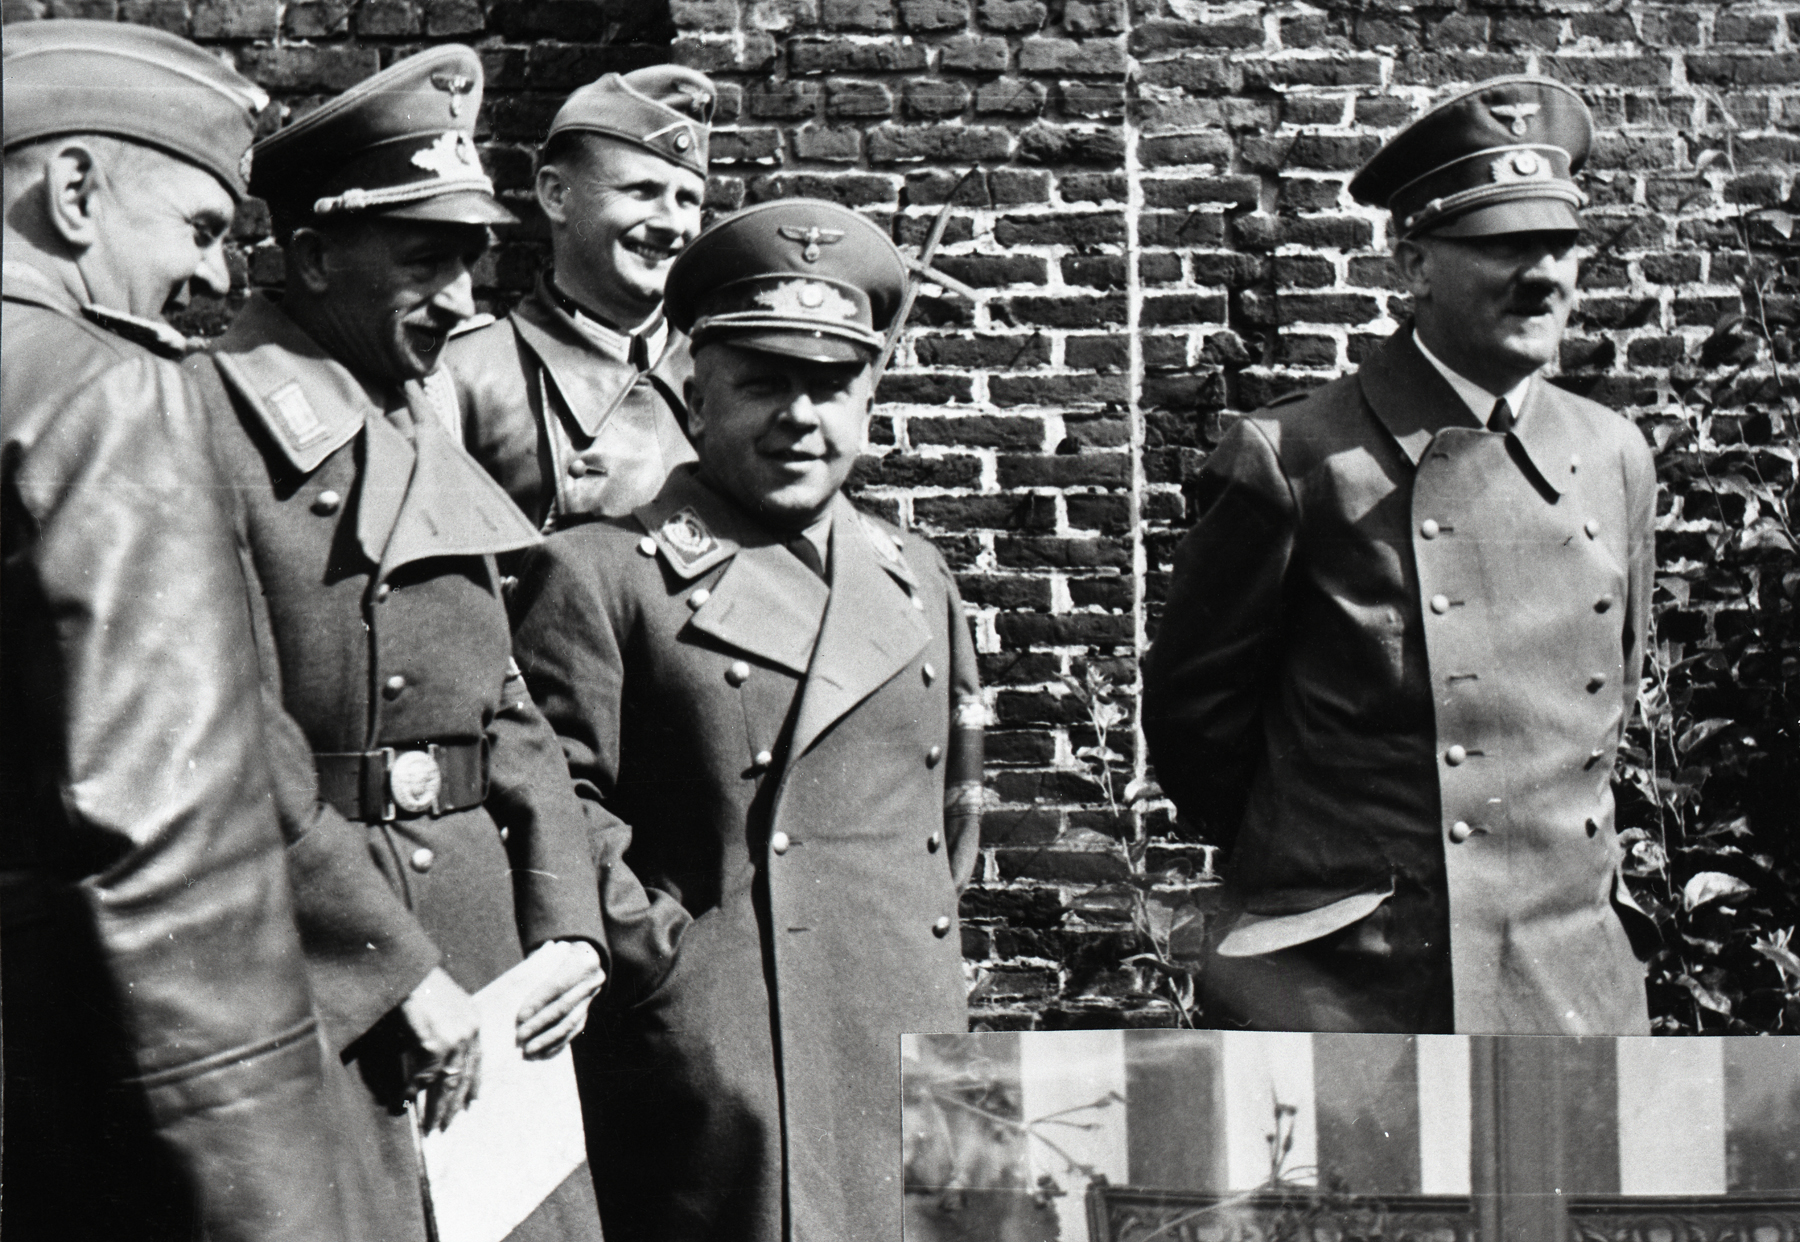 Max Amann, Ernst Schmidt and Adolf Hitler at their former regiment building in Fournes en Weppes, from Eva Braun's albums